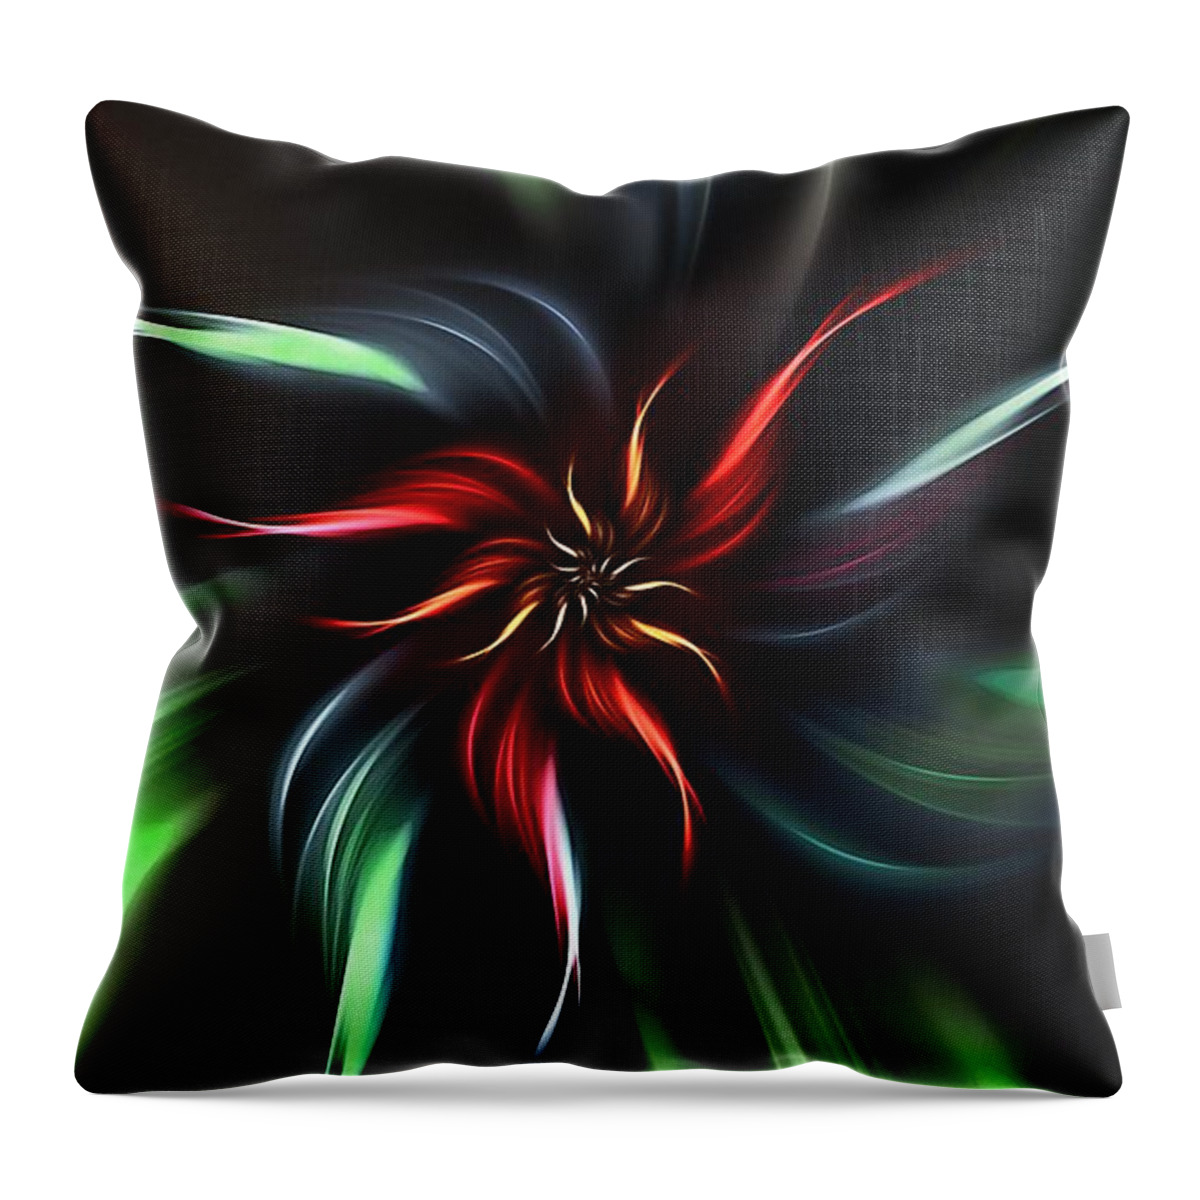 Fine Art Throw Pillow featuring the digital art Floral Fantasy 042014 by David Lane